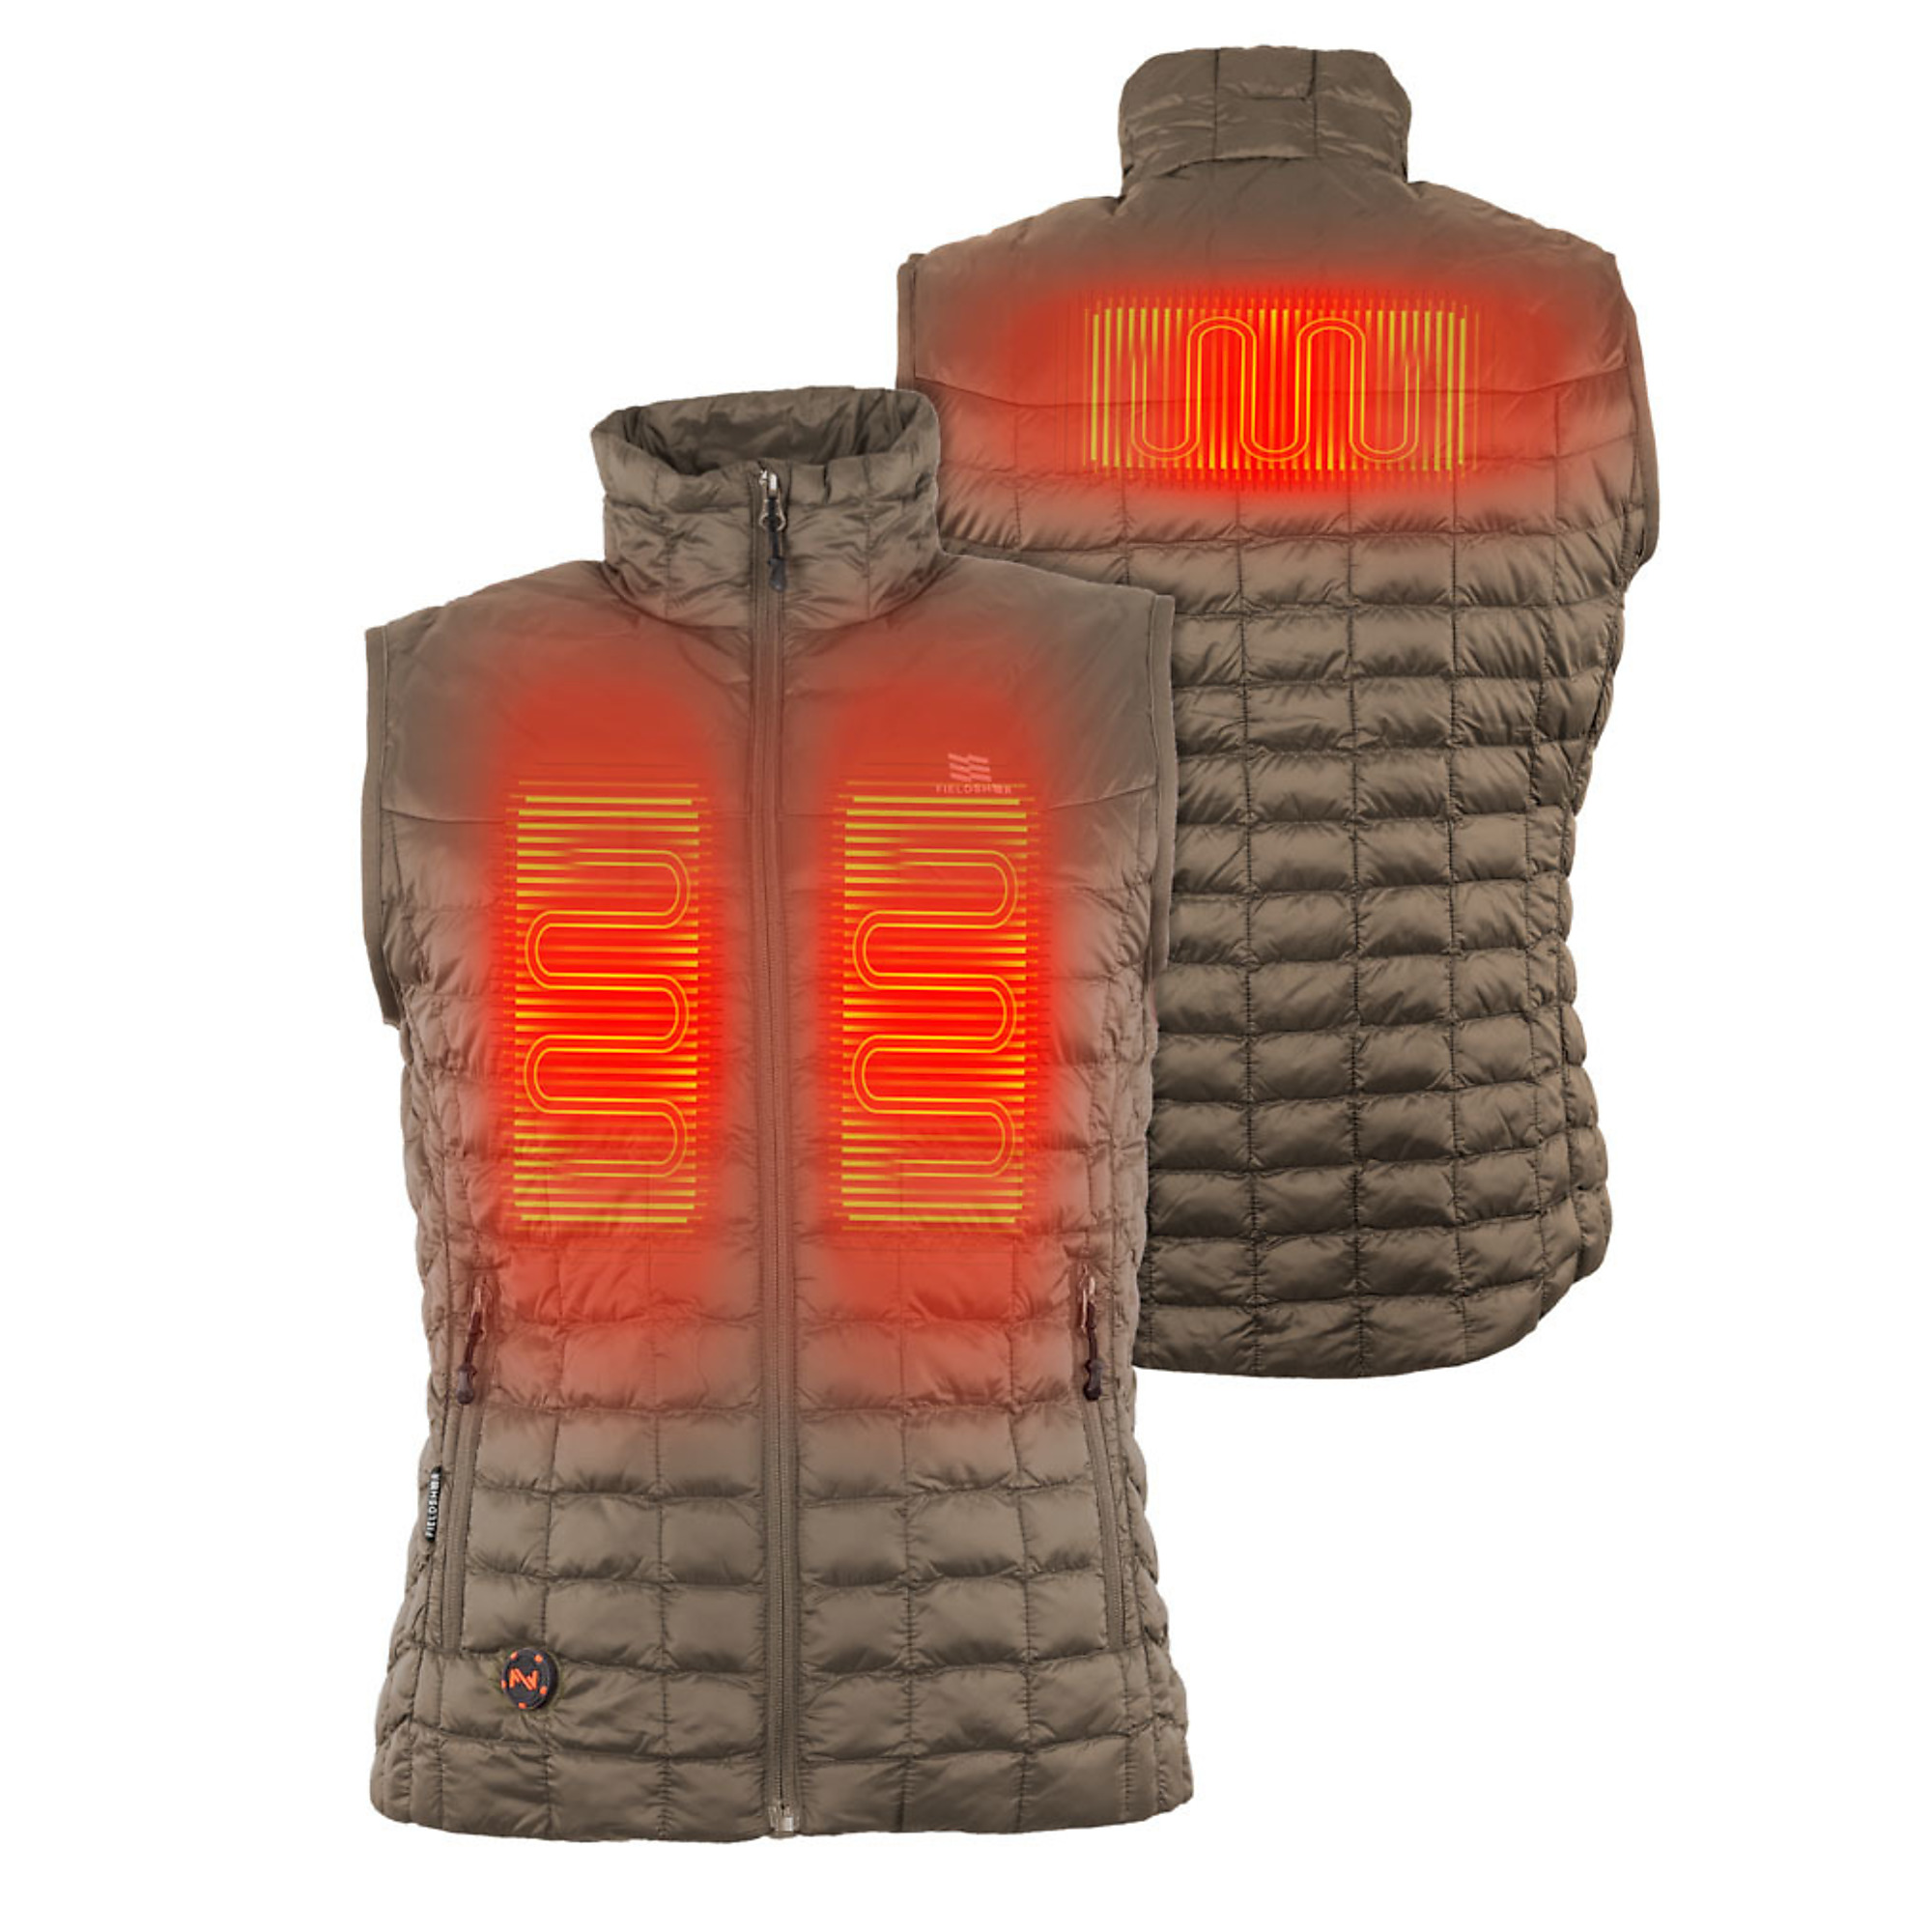 Fieldsheer, Women's 7.4v Backcountry Heated Vest, Size M, Color Tan, Model MWWV04340321